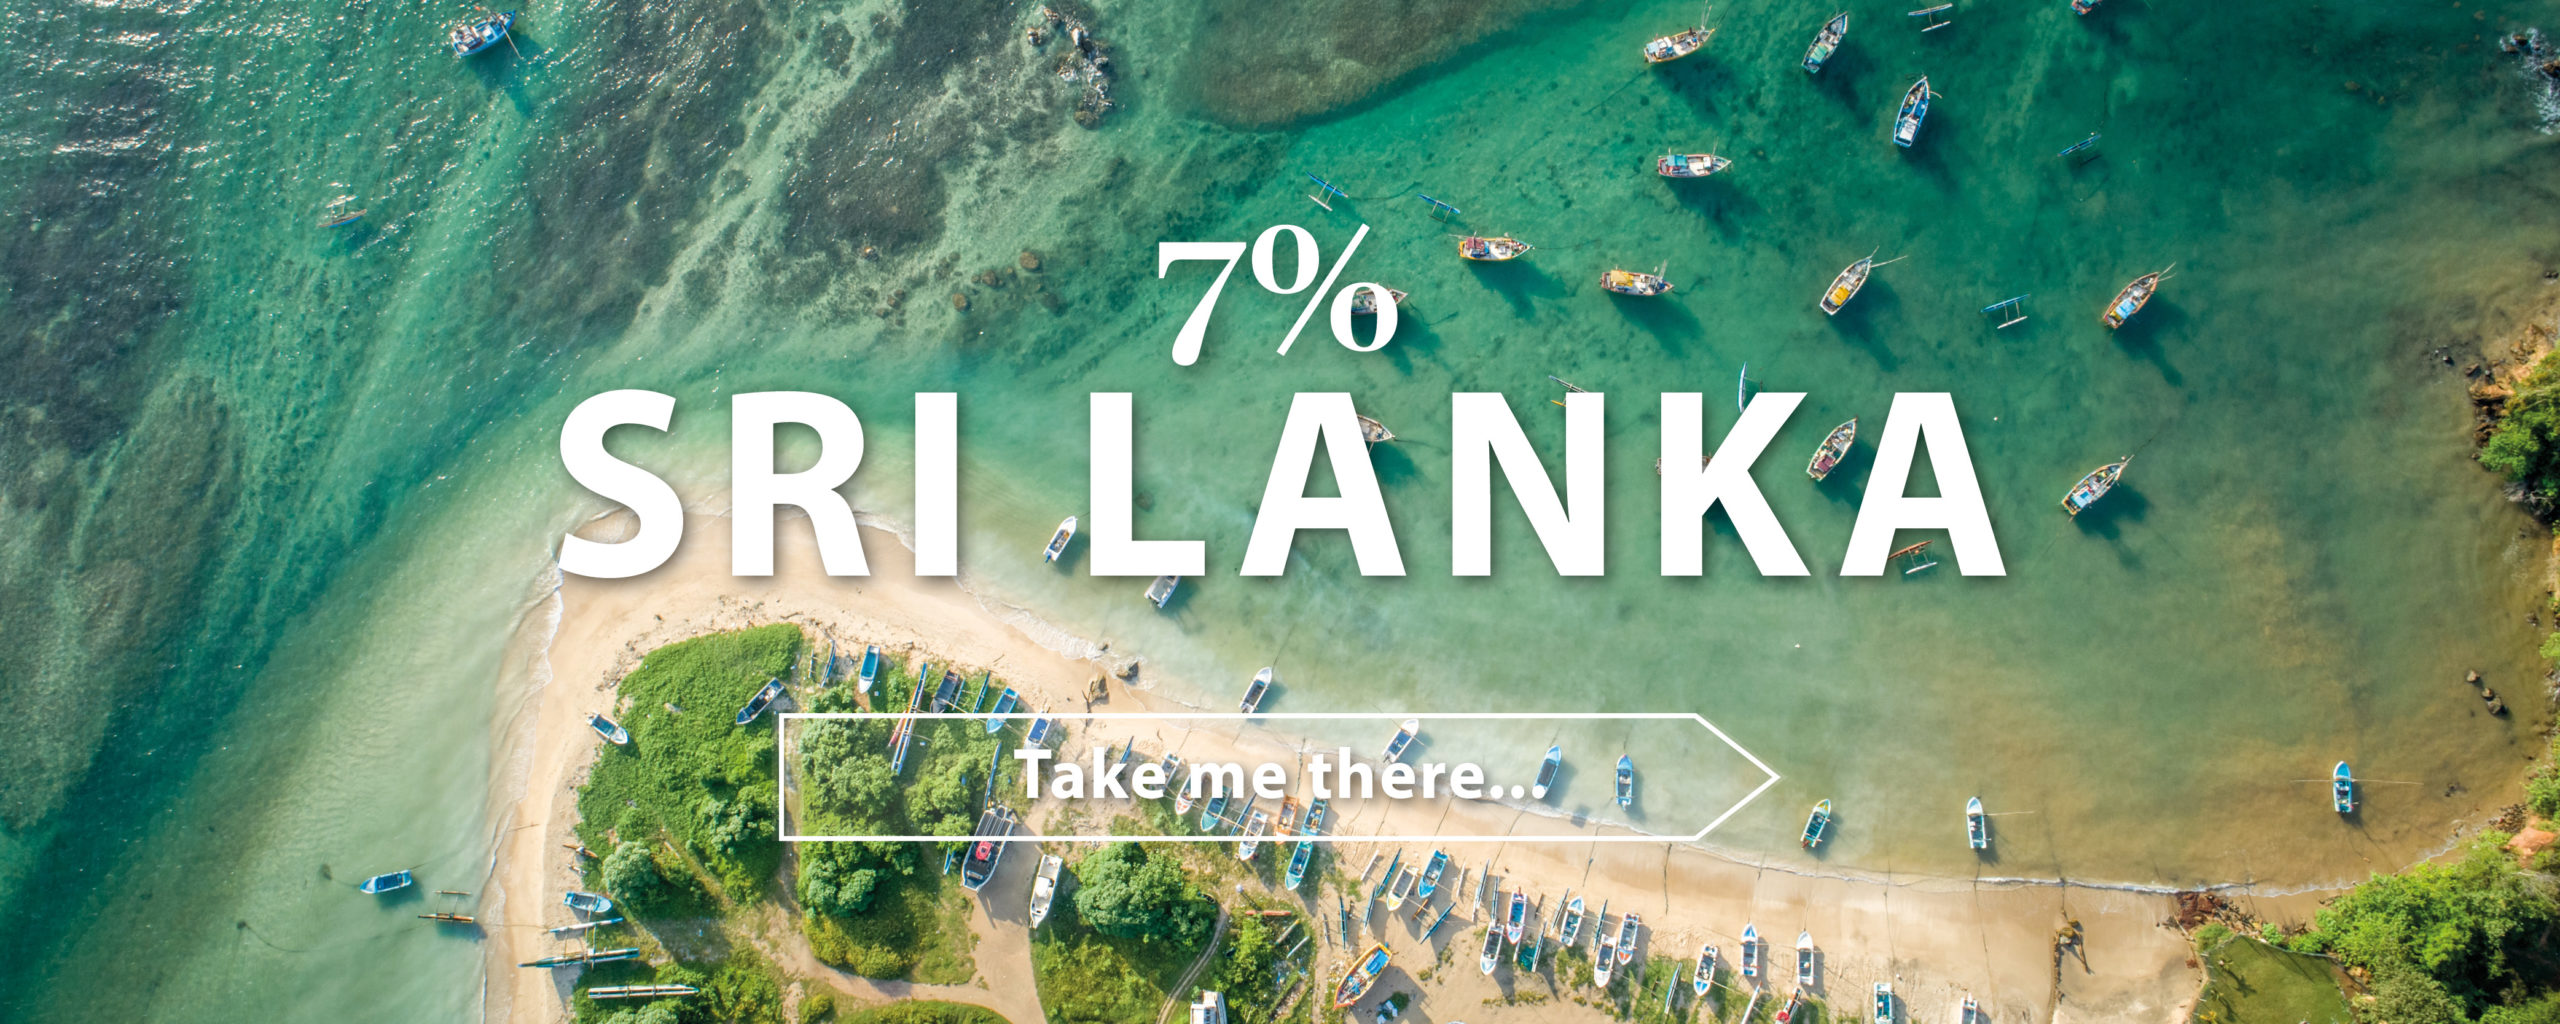 Where youre going this year_sri Lanka